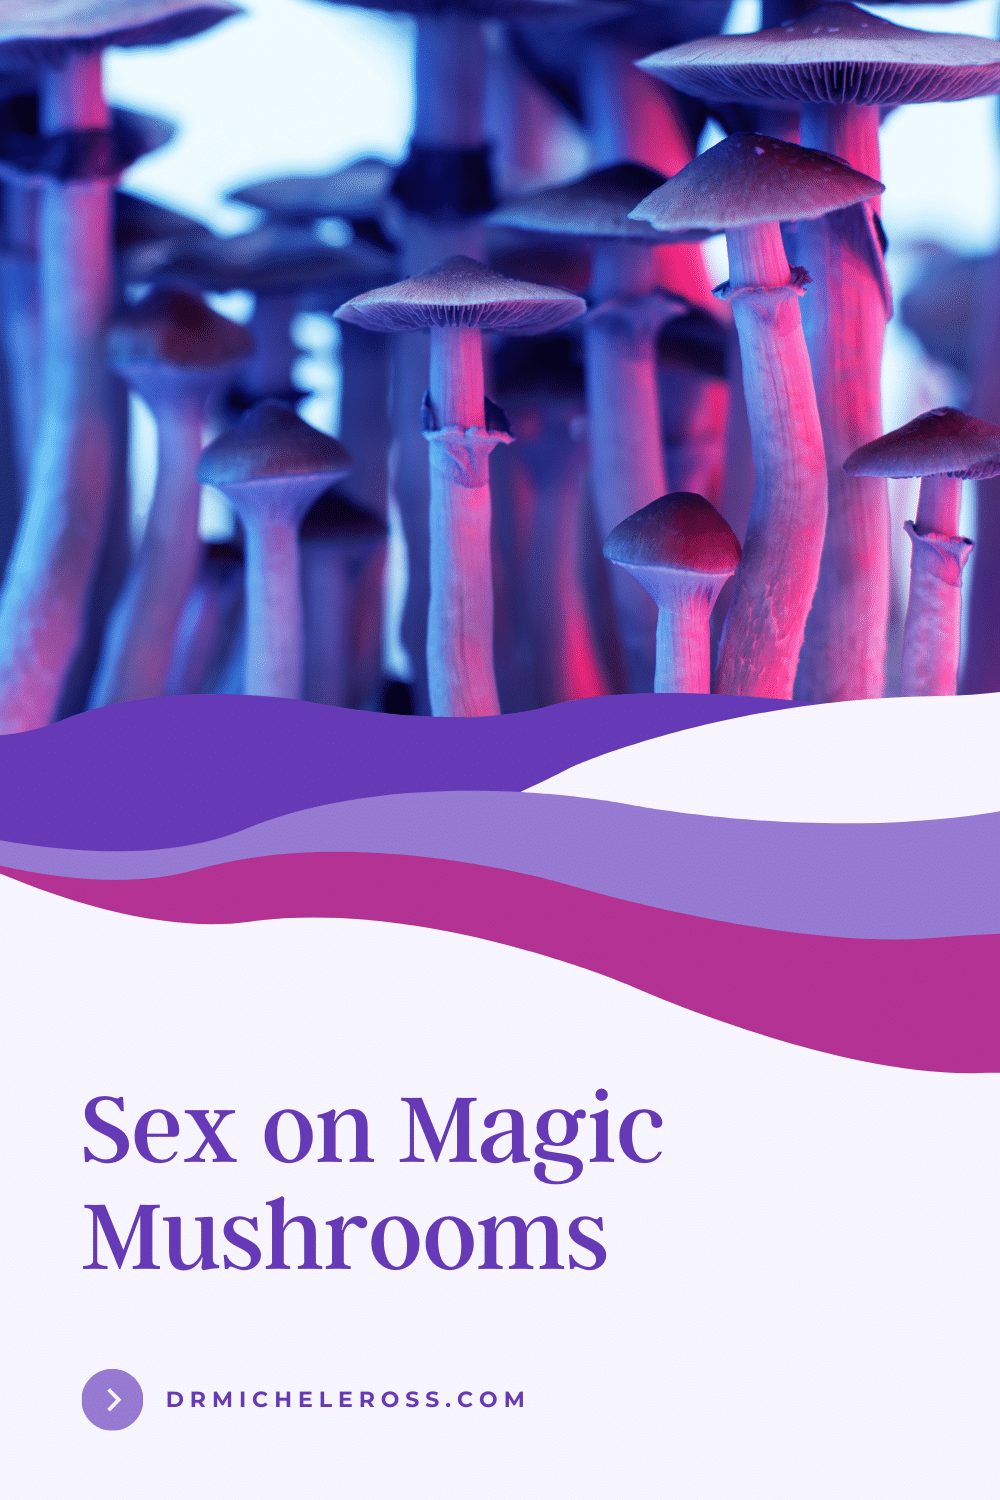 psilocybin mushrooms make sex great